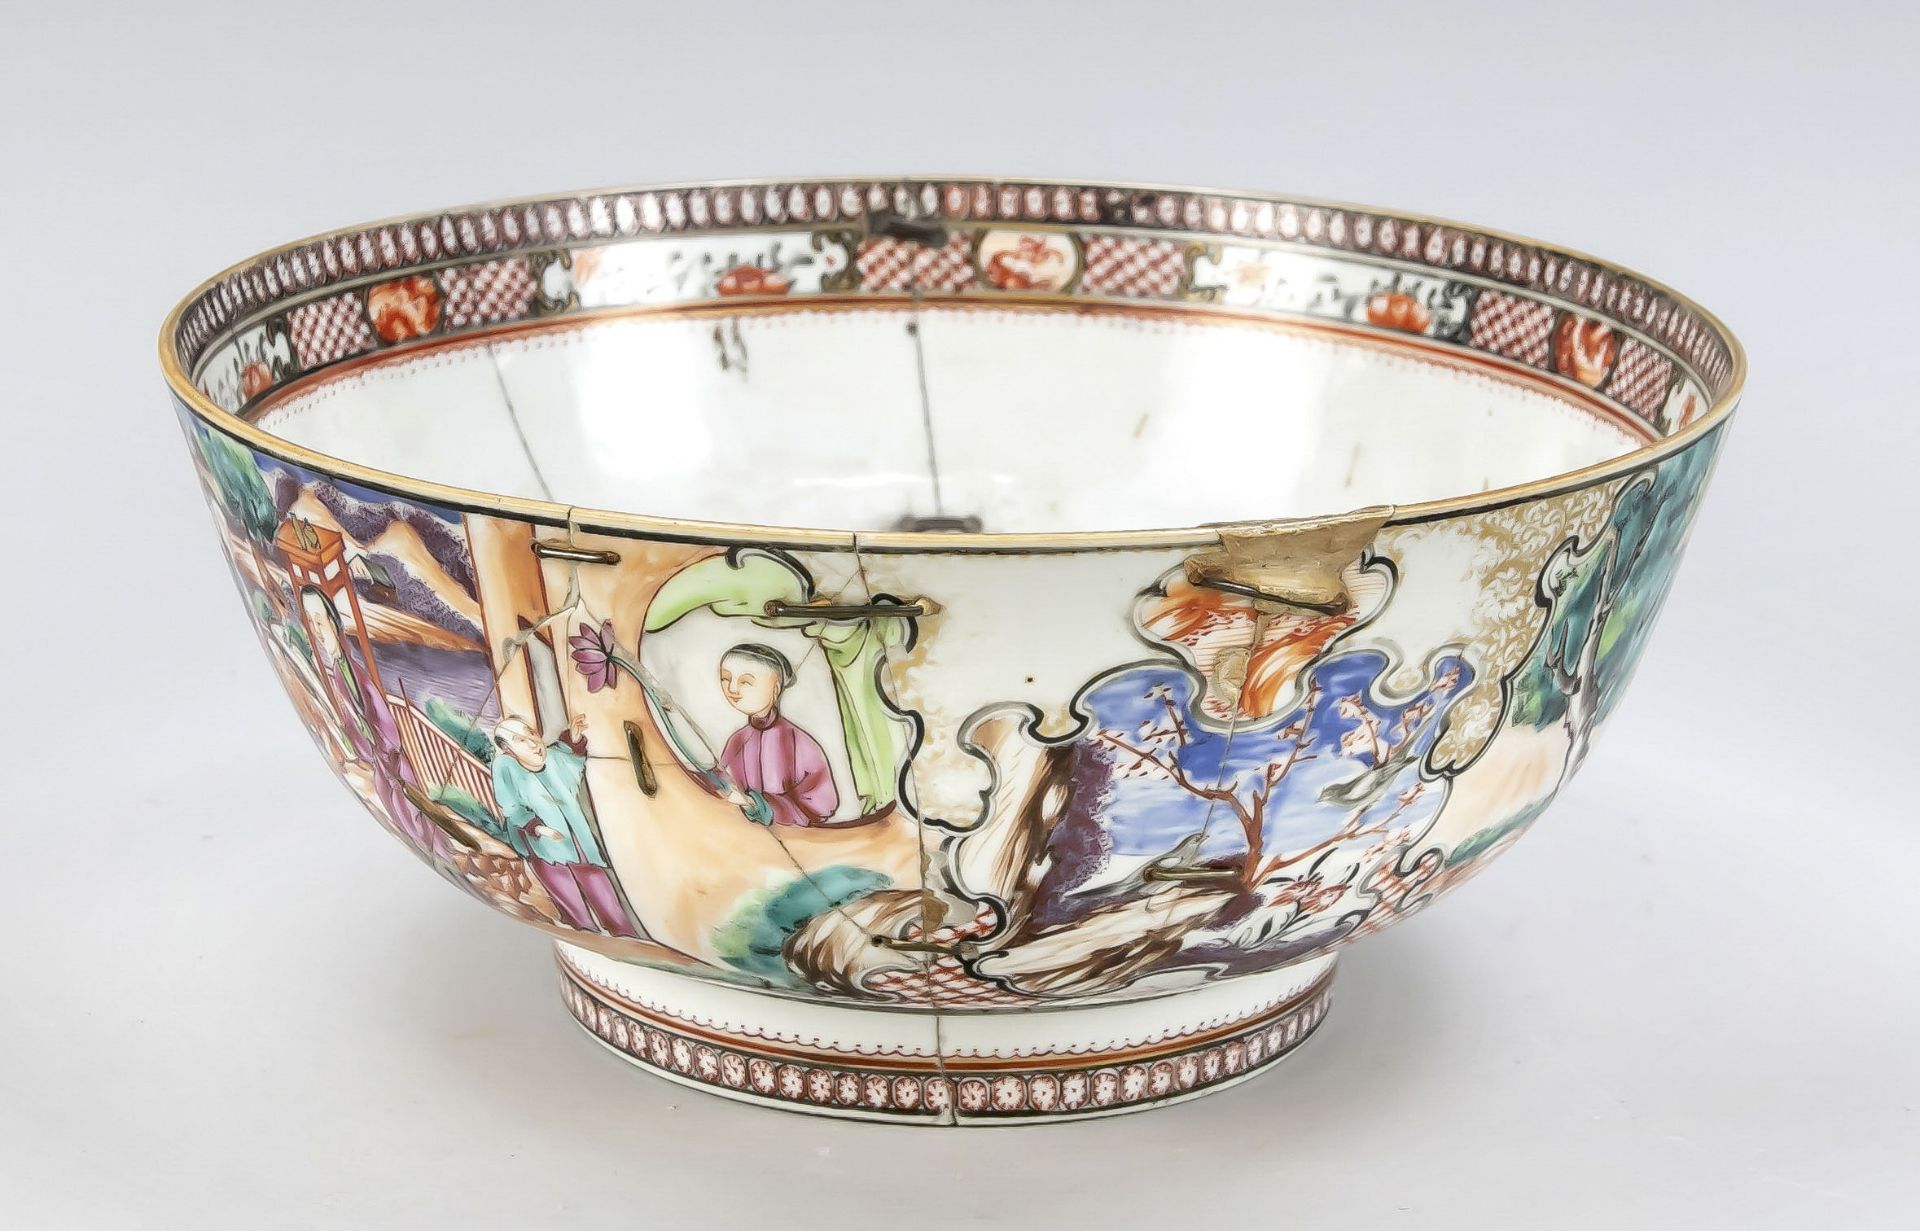 Famille Rose Export Mandarin Bowl, China, 18th century (Qianlong/Qing). Circumferentially